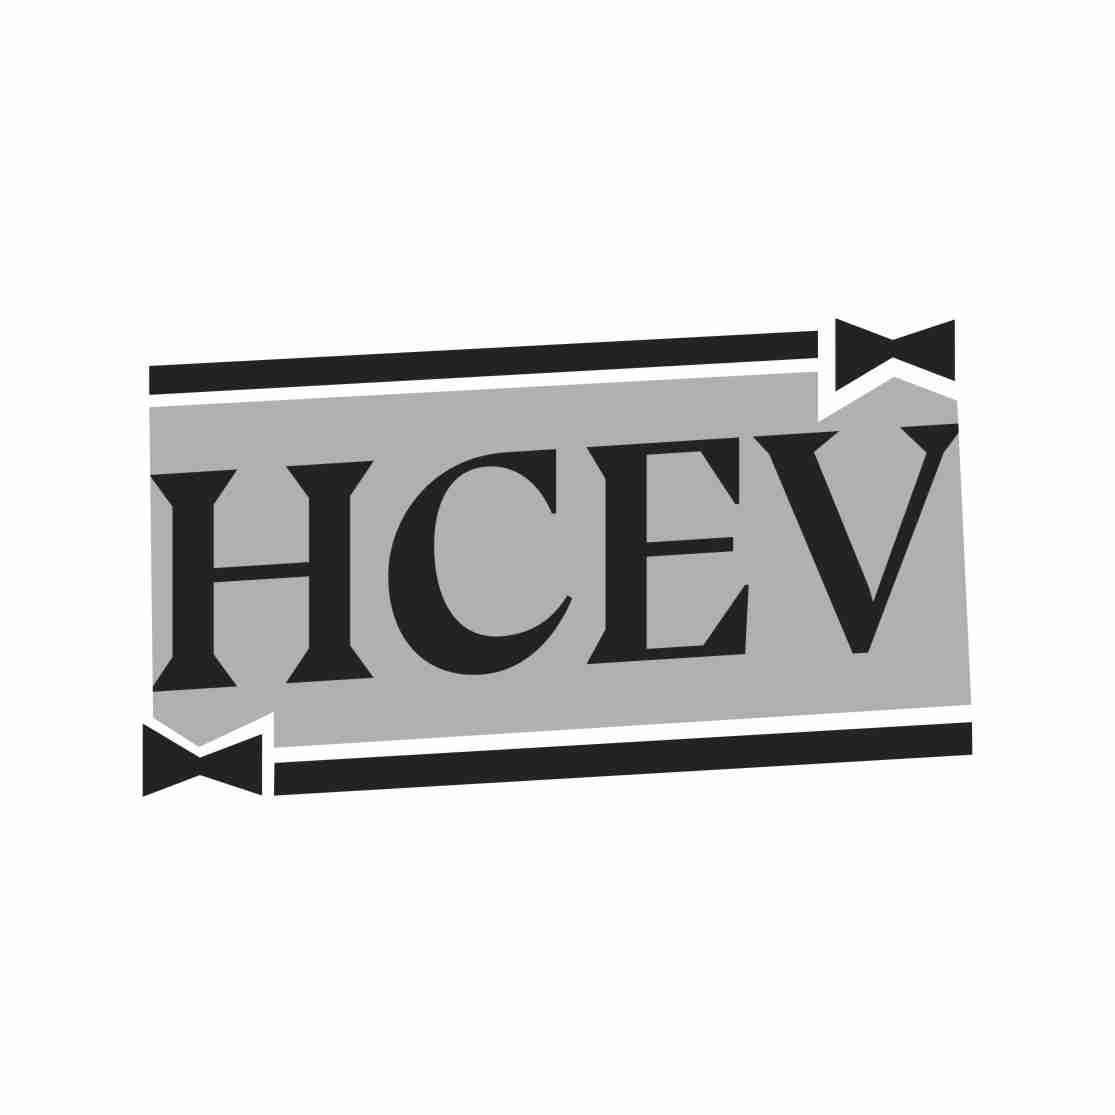 HCEV